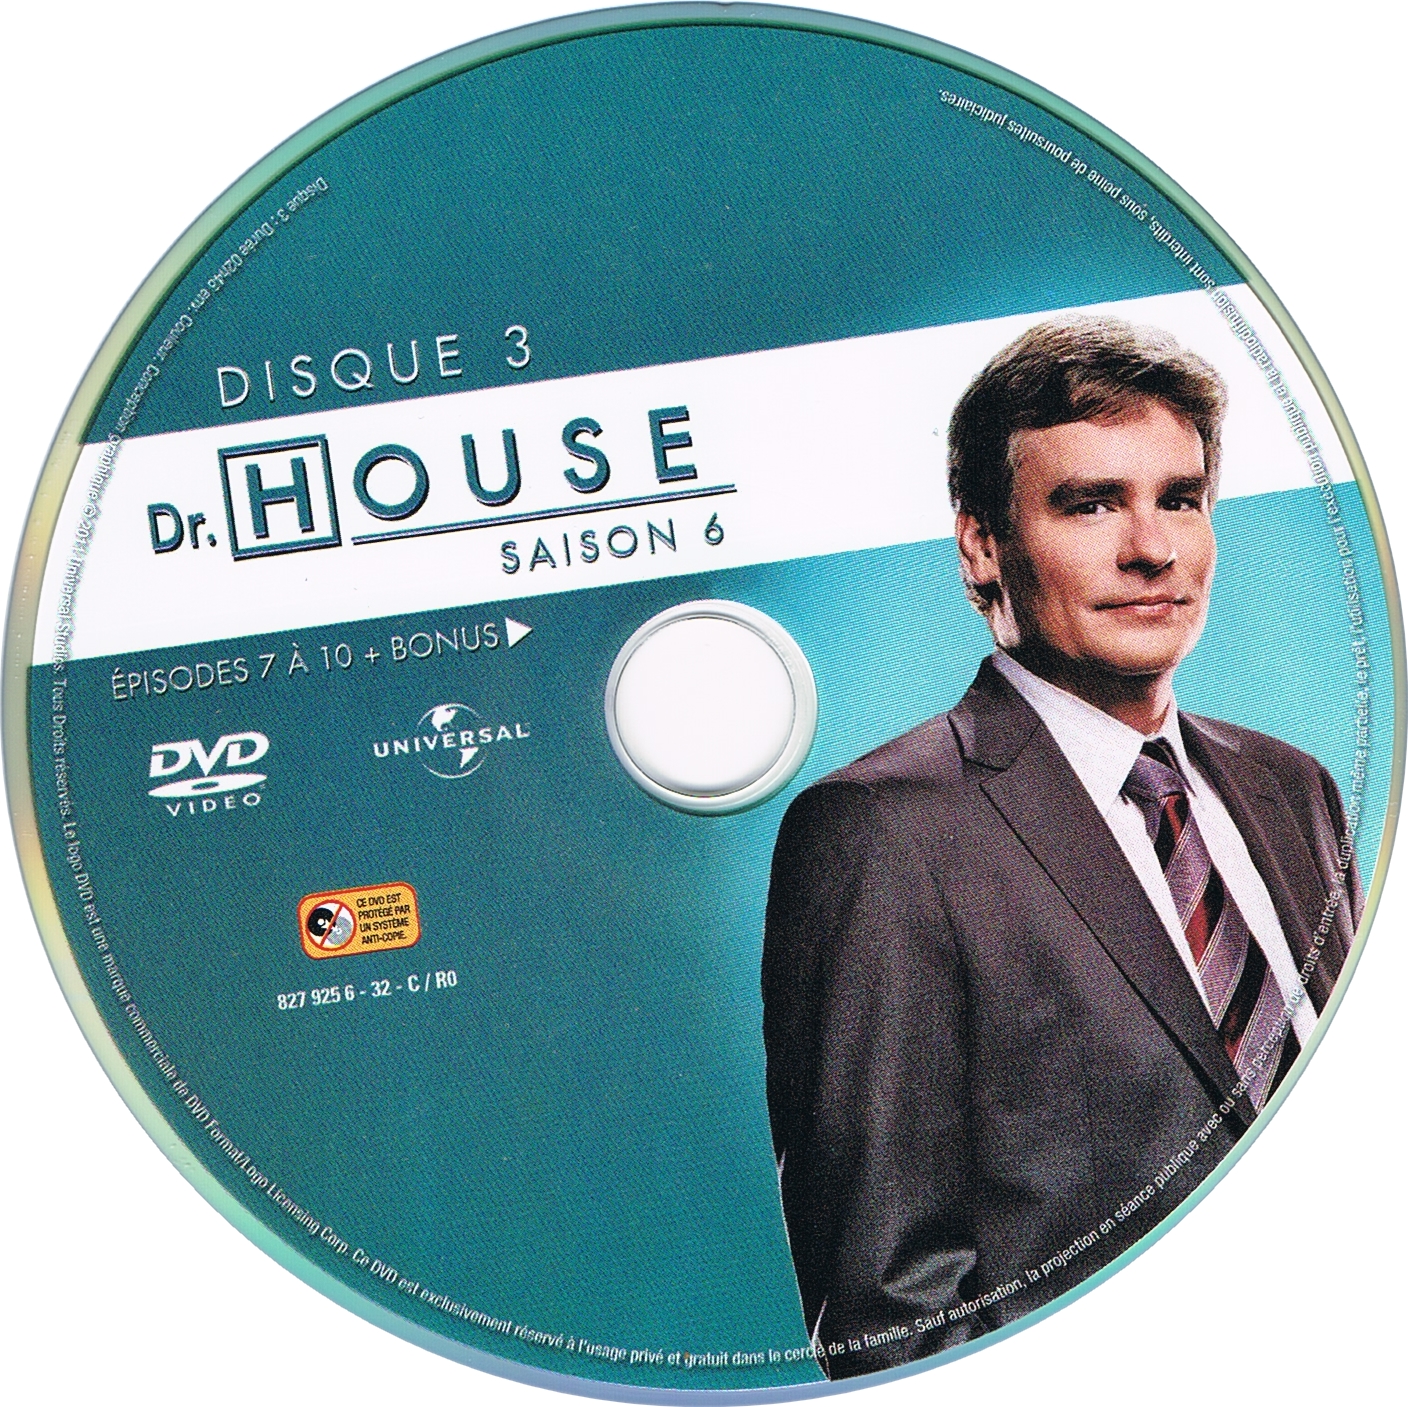 Dr House Saison 6 DVD 3